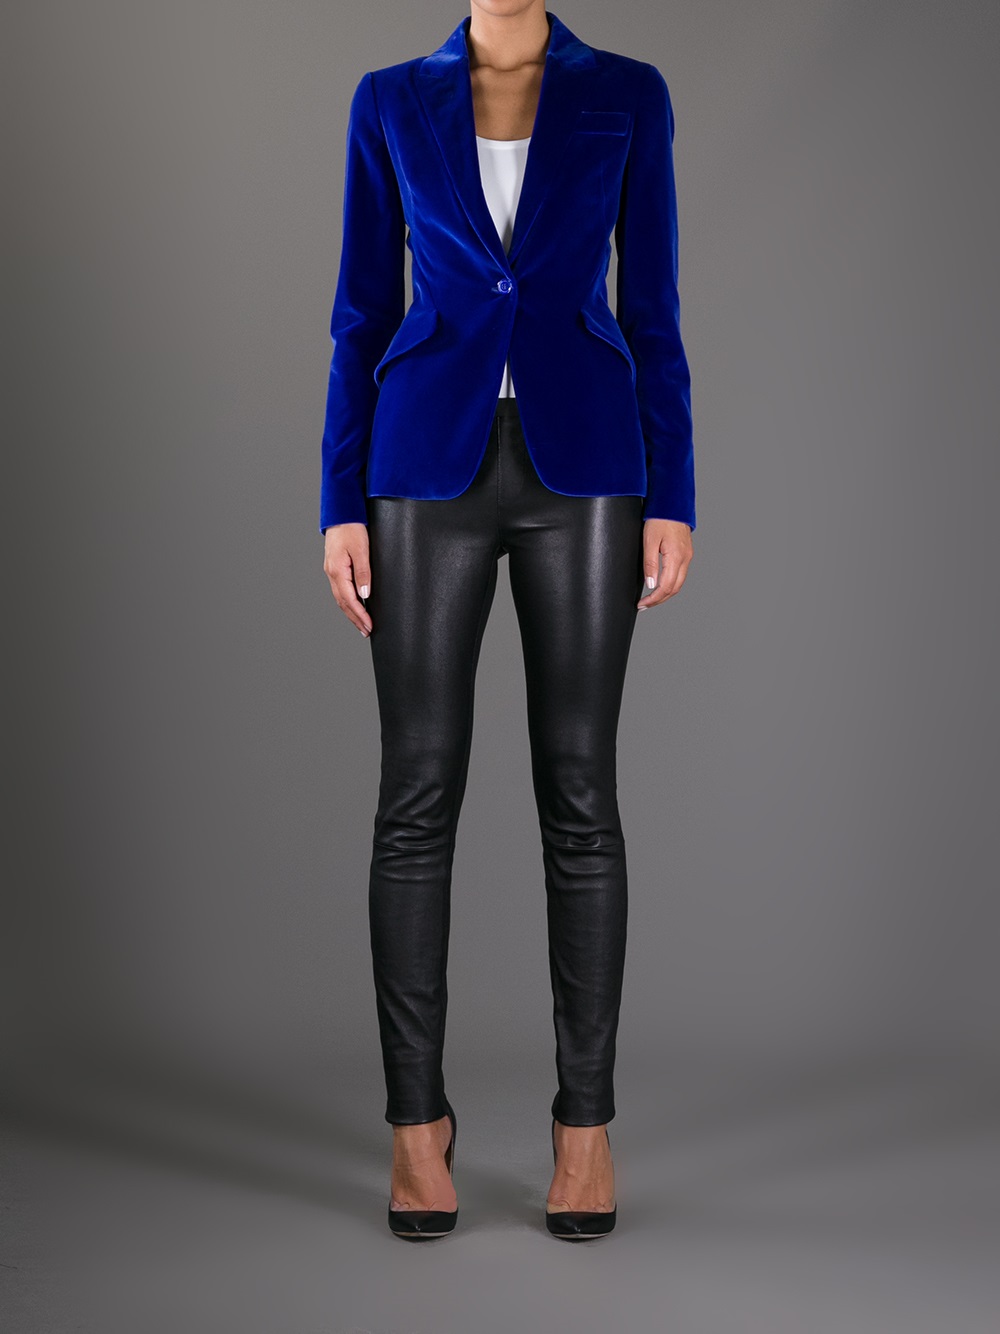 Alexander McQueen Velvet Blazer in Blue | Lyst